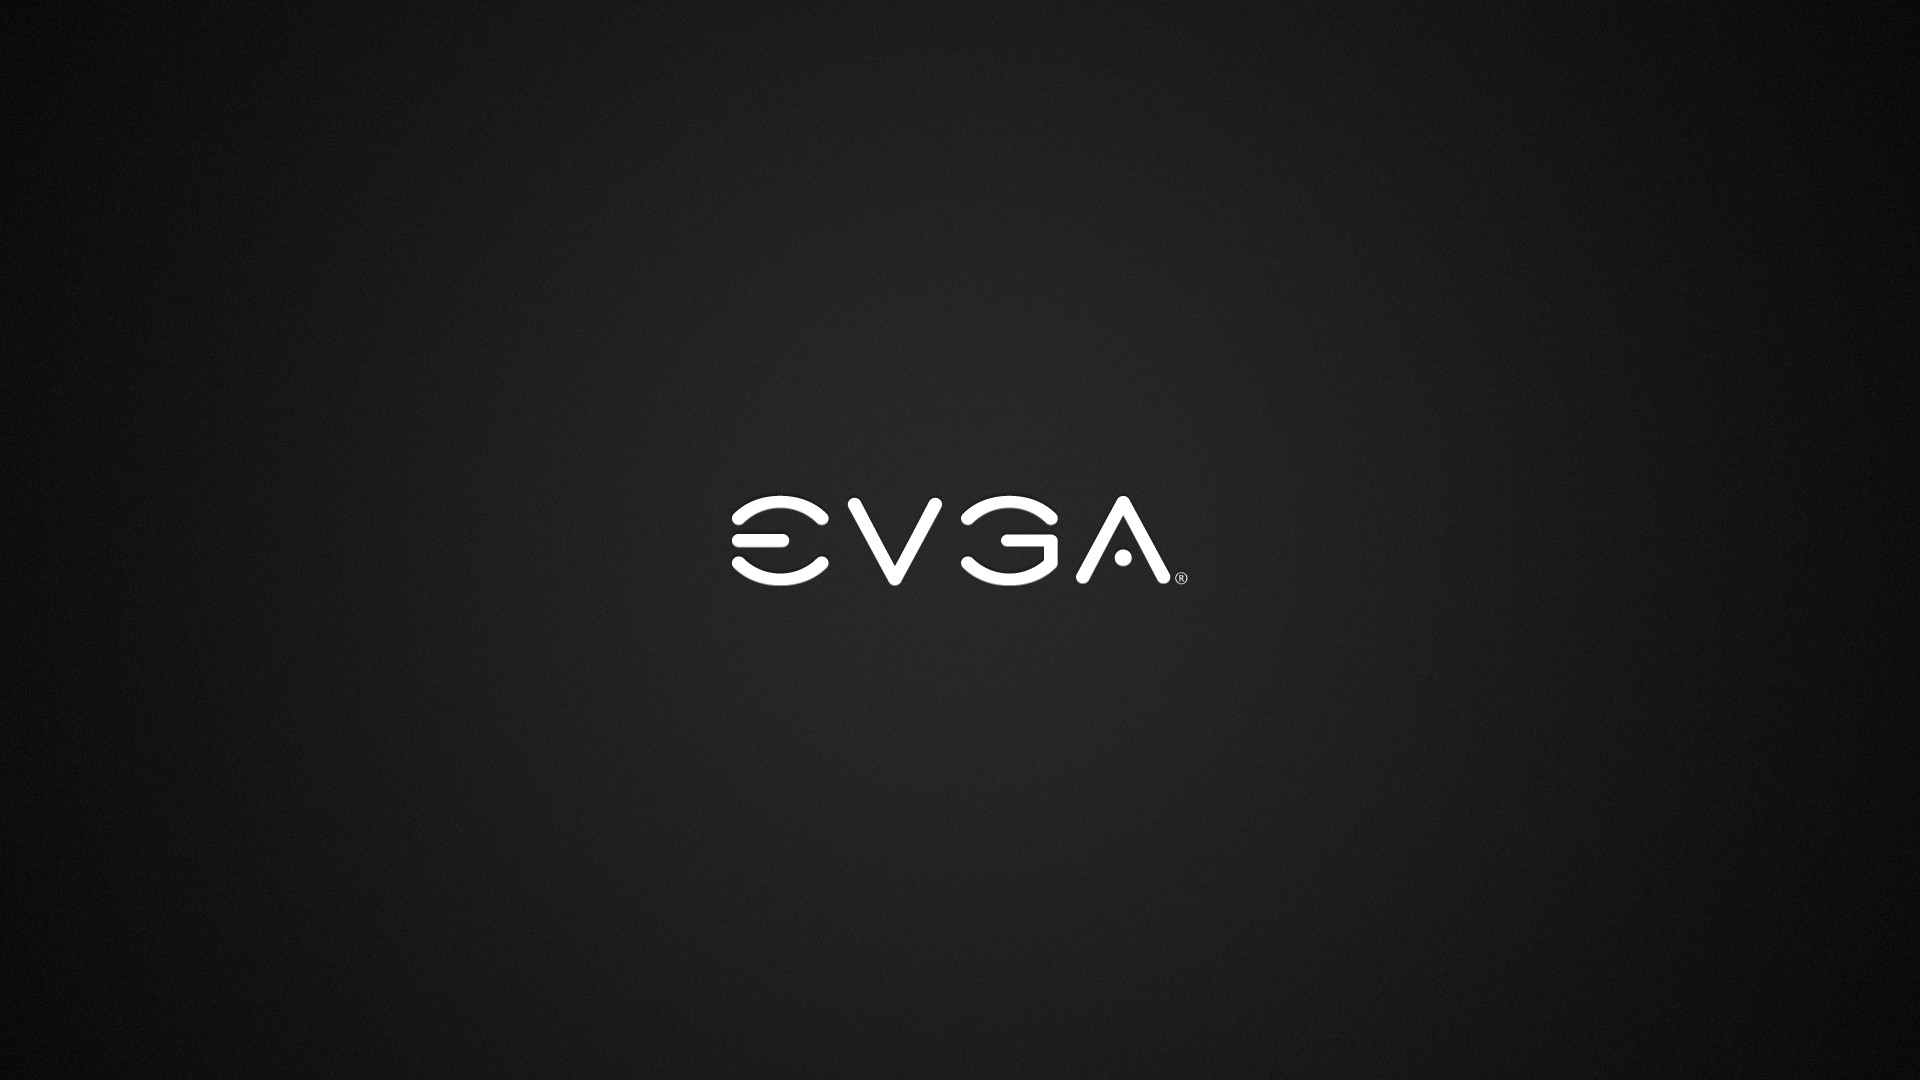 evga computer graphics card Wallpaper